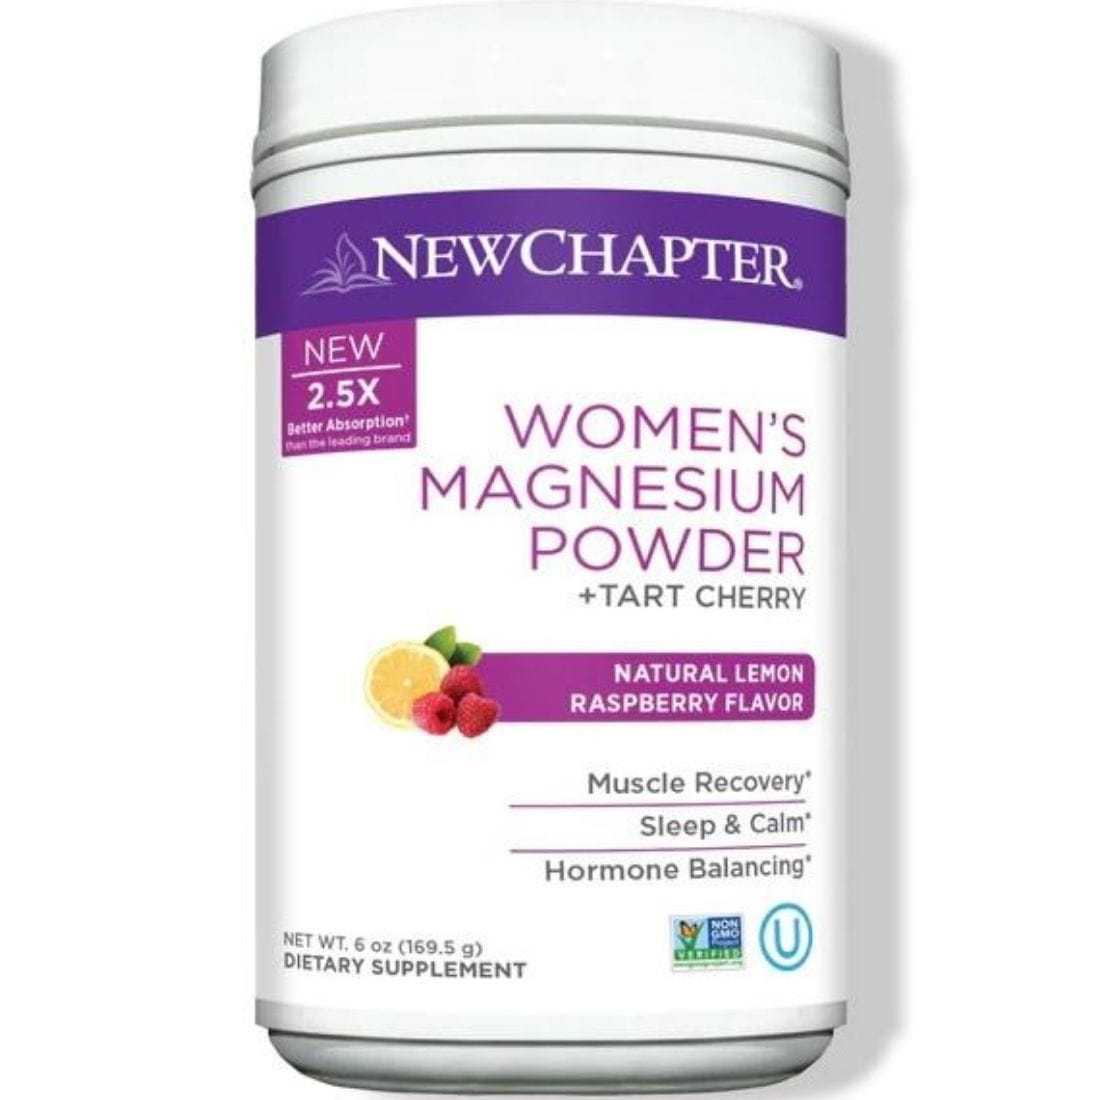 New Chapter Women's Magnesium Powder Plus Tart Cherry (2.5X Better Absorption)